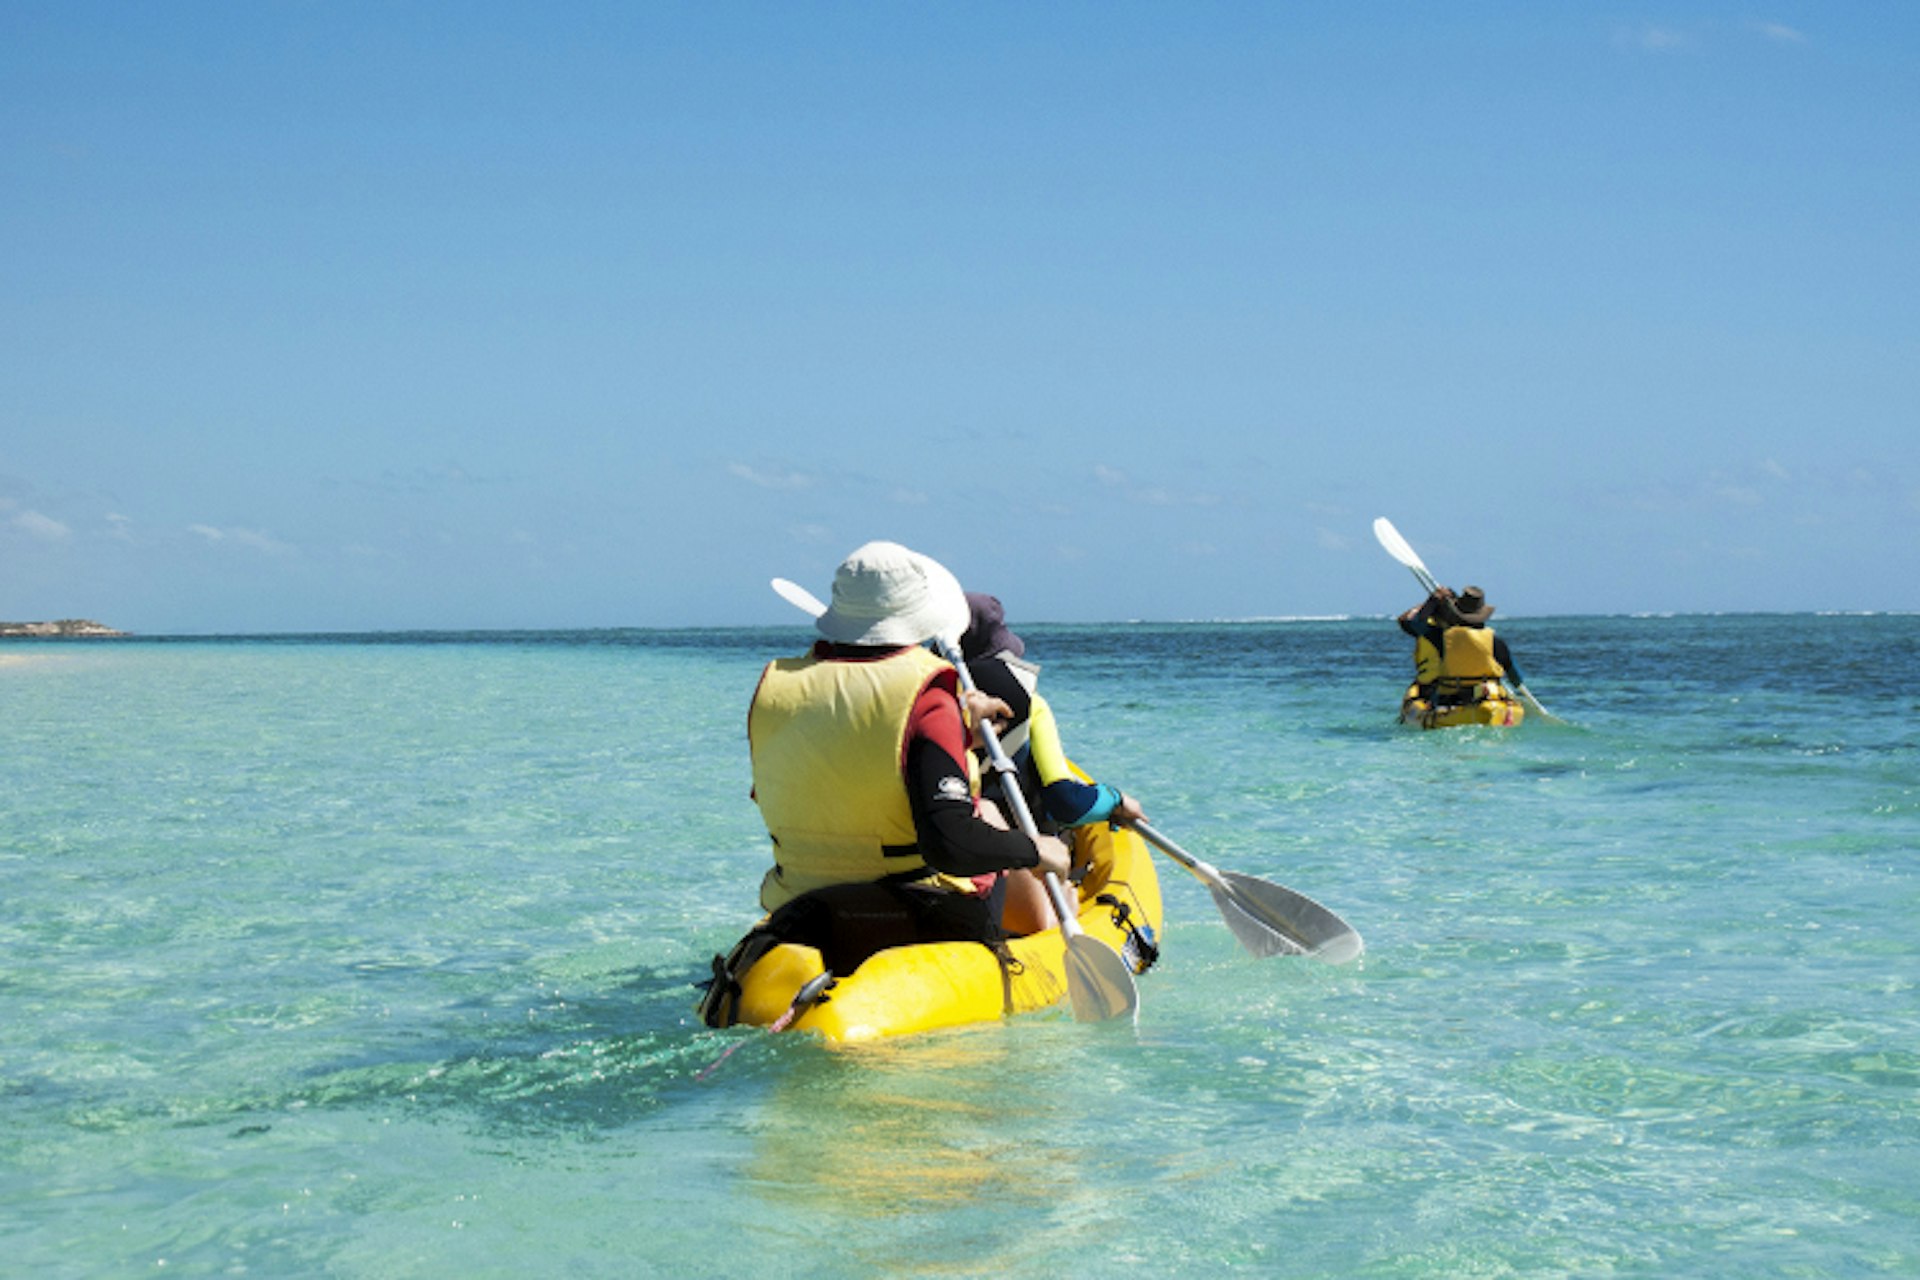 Ocean kayaking on Nigaloo Reef / Image by Raymond Patrick / Getty Images